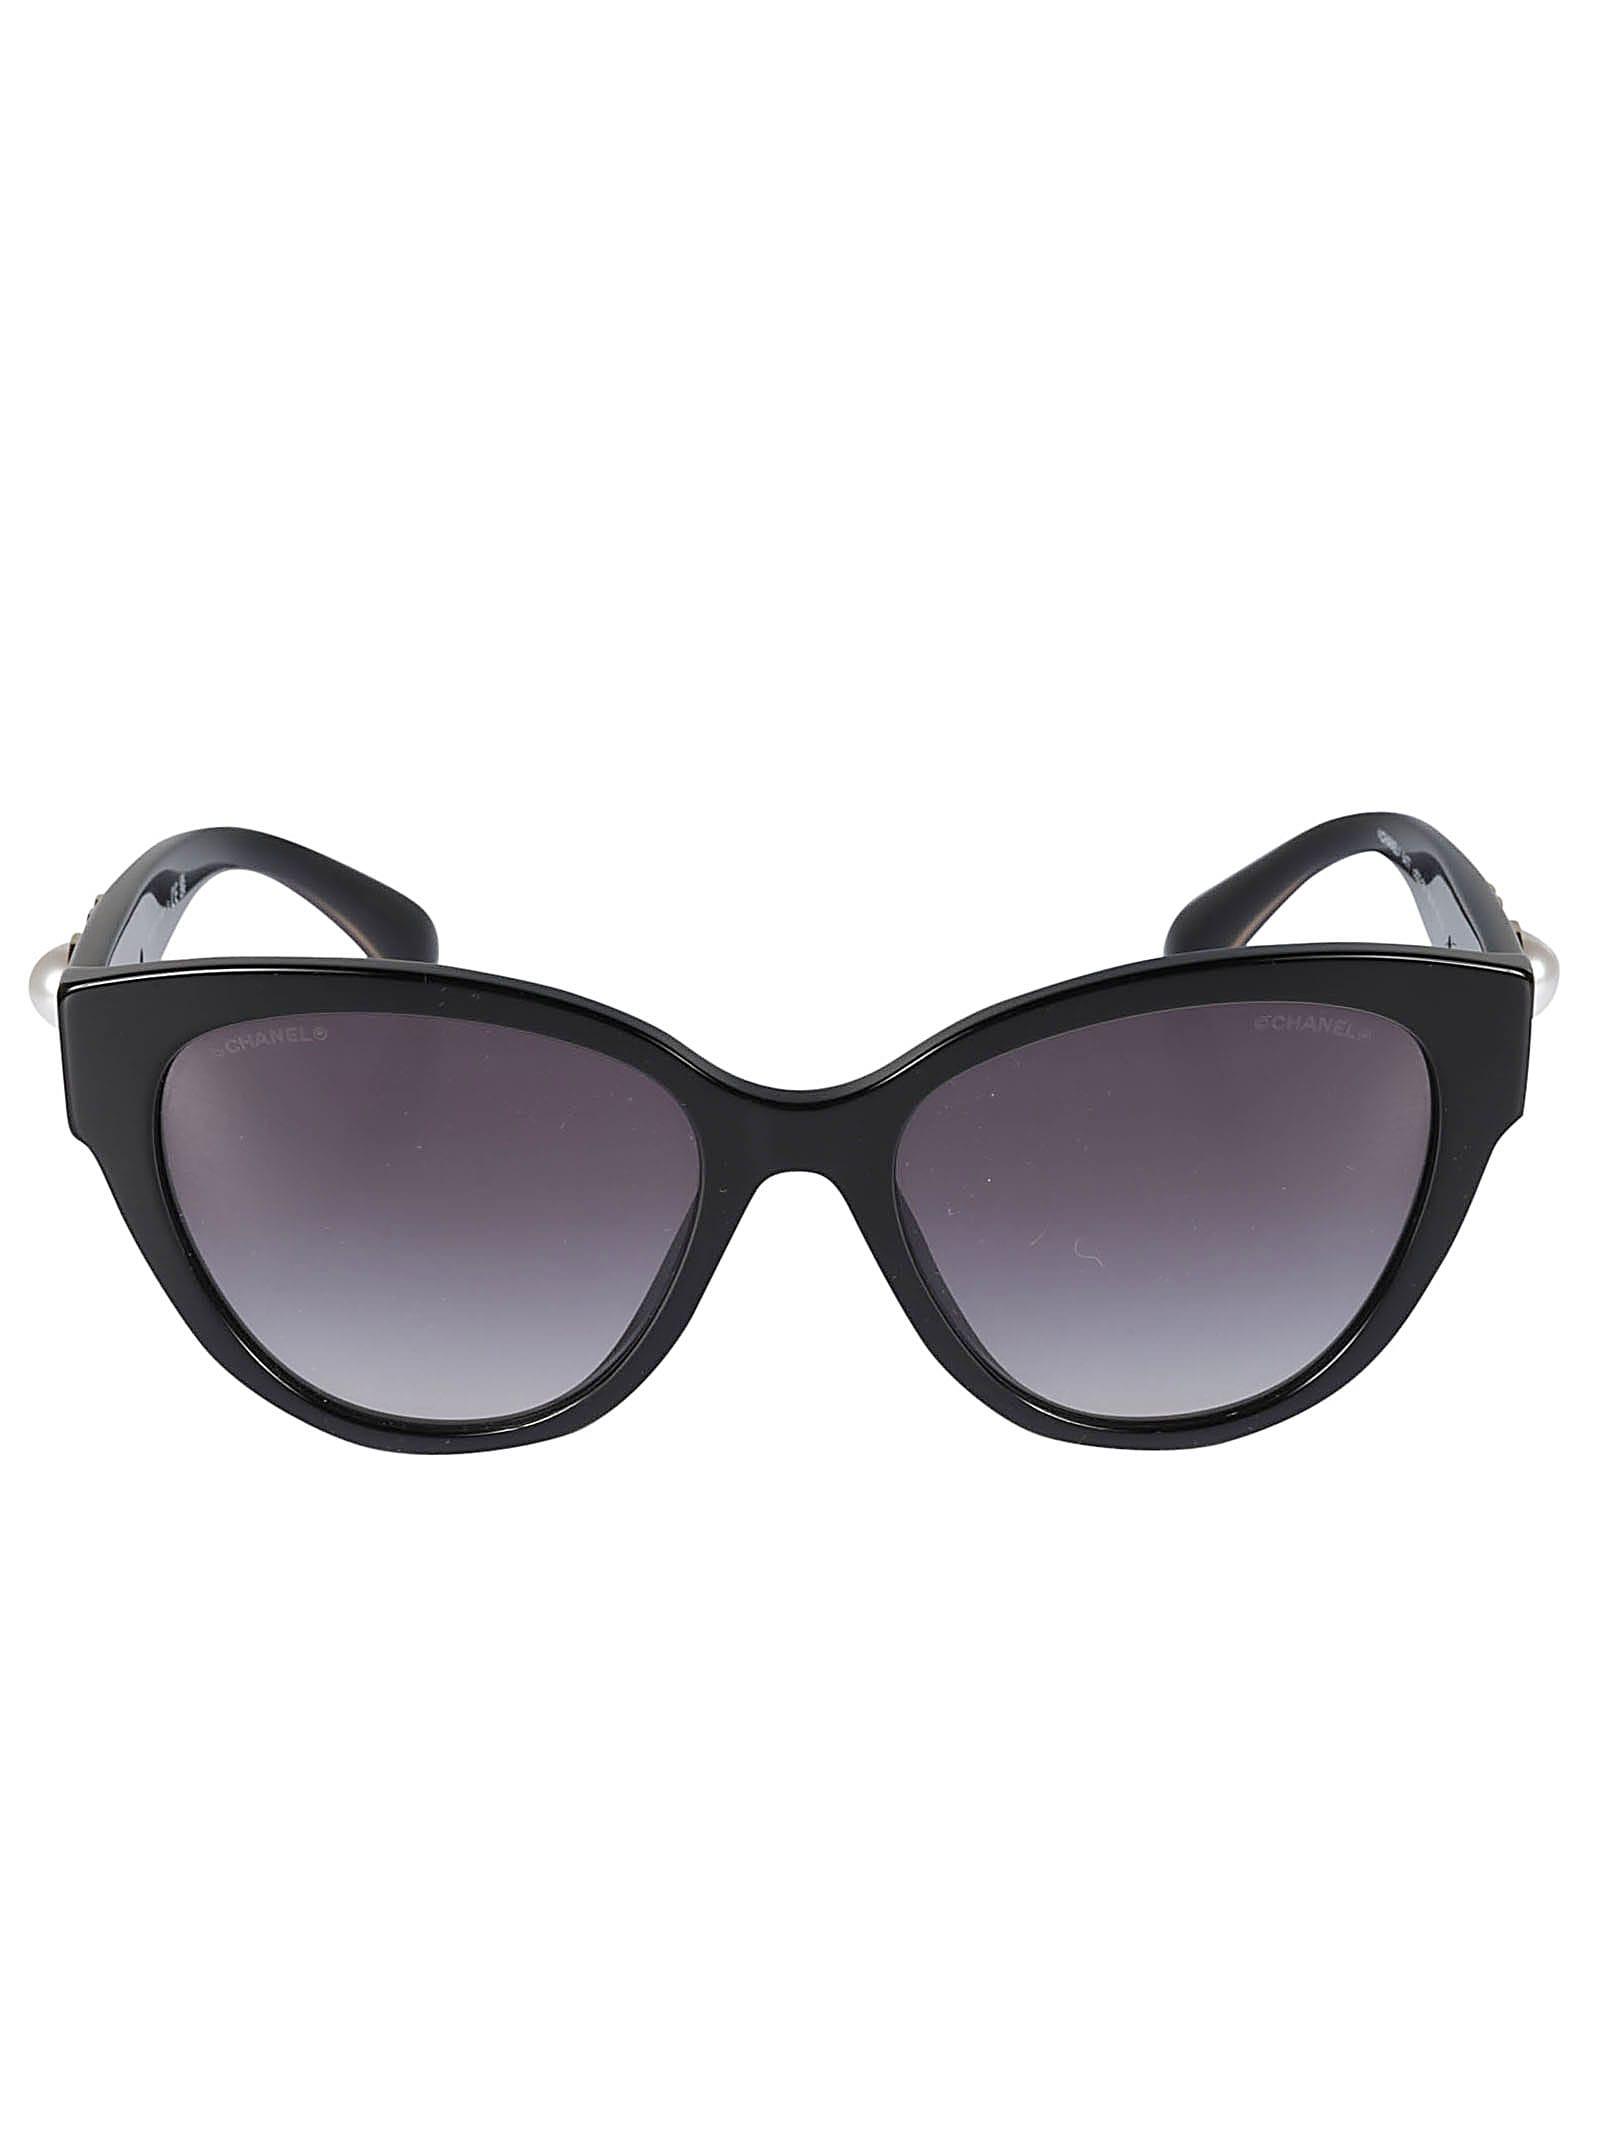 Chanel Butterfly Sunglasses in Gray | Lyst